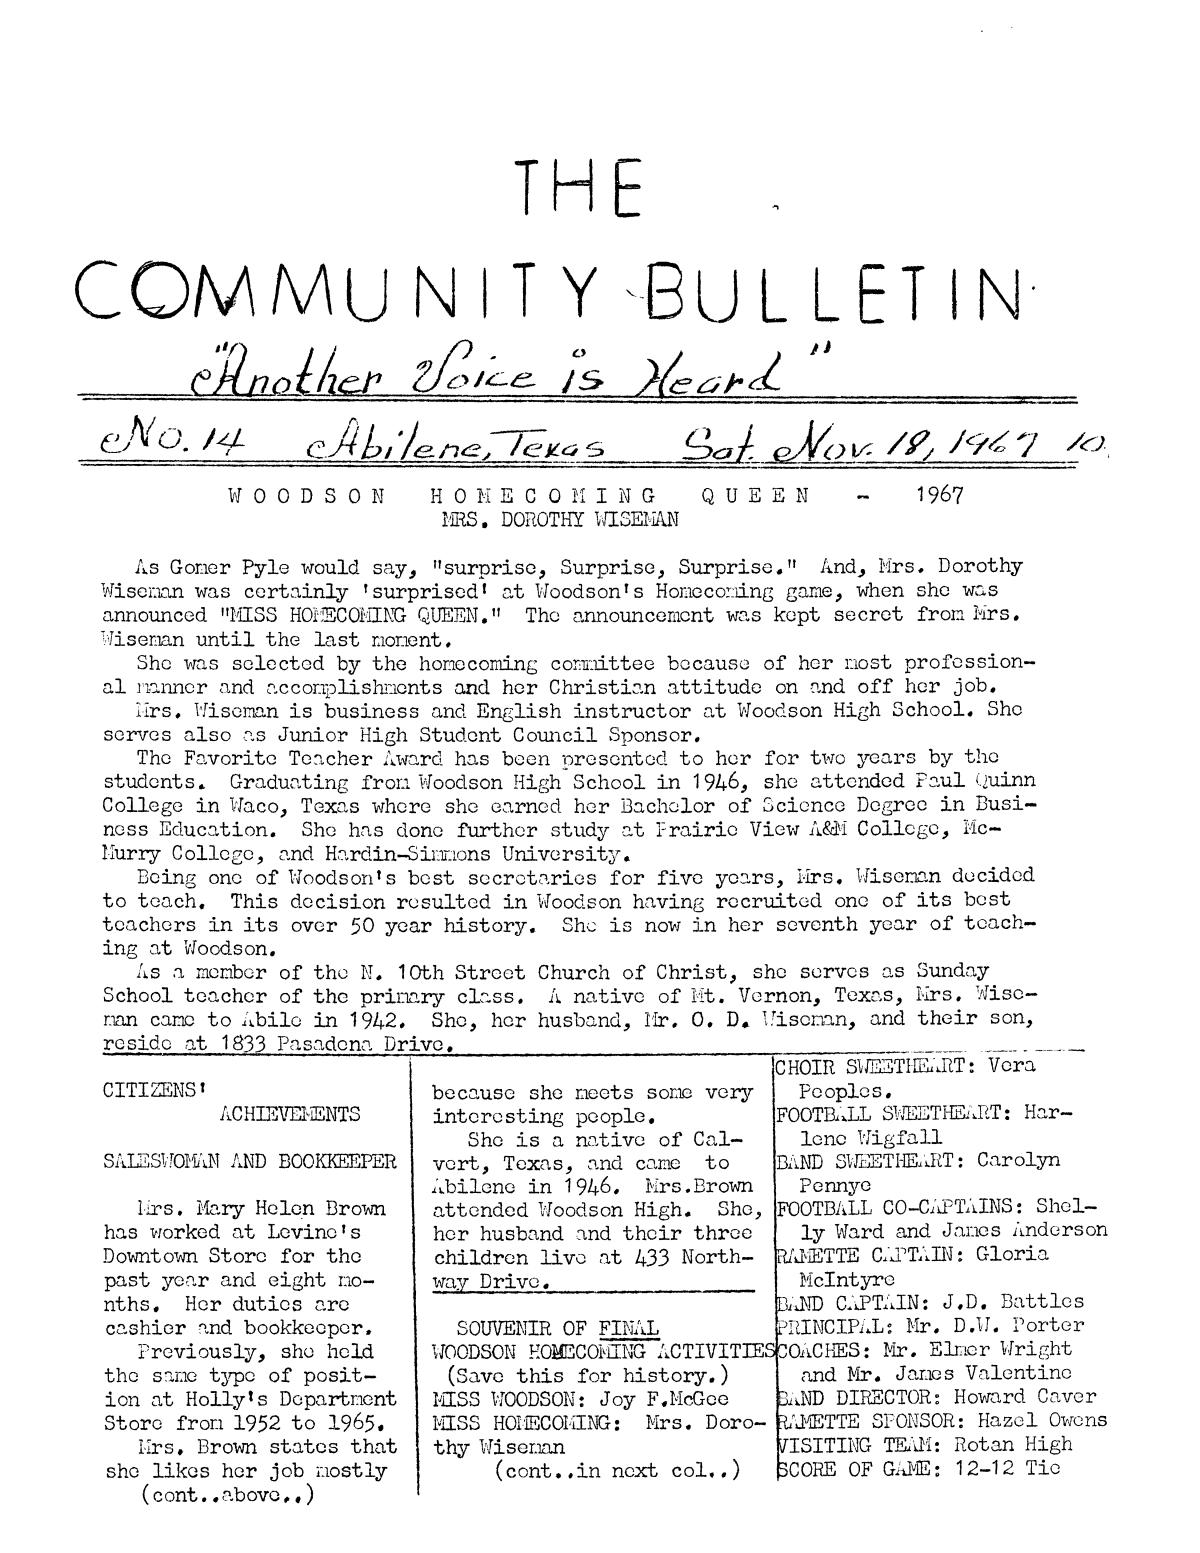 The Community Bulletin (Abilene, Texas), No. 14, Saturday, November 18, 1967
                                                
                                                    1
                                                